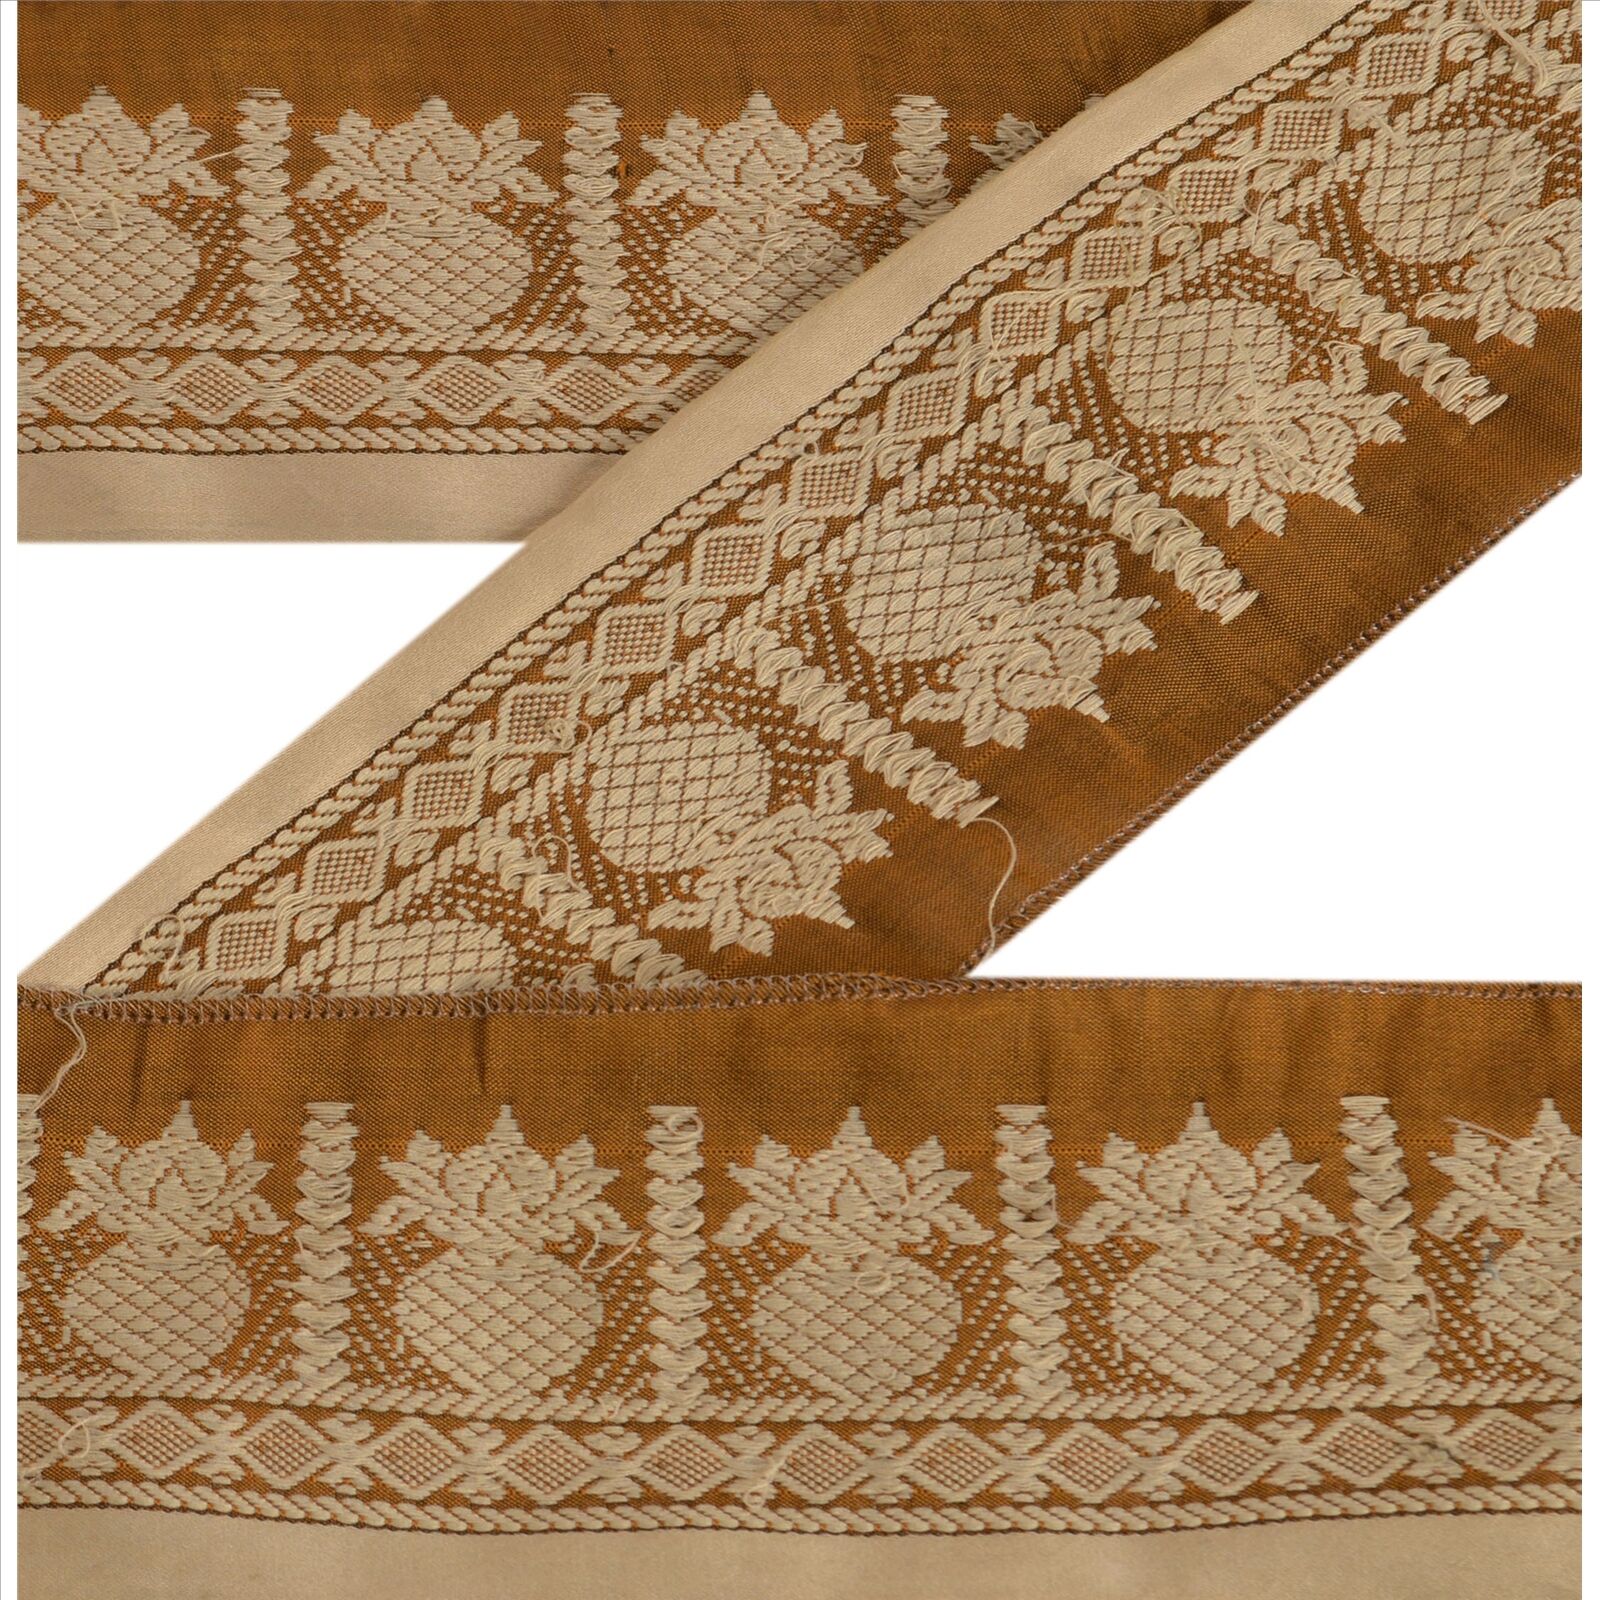 Vintage Sari Border Antique Embroidered Woven  Trim Sewing Saffron Lace